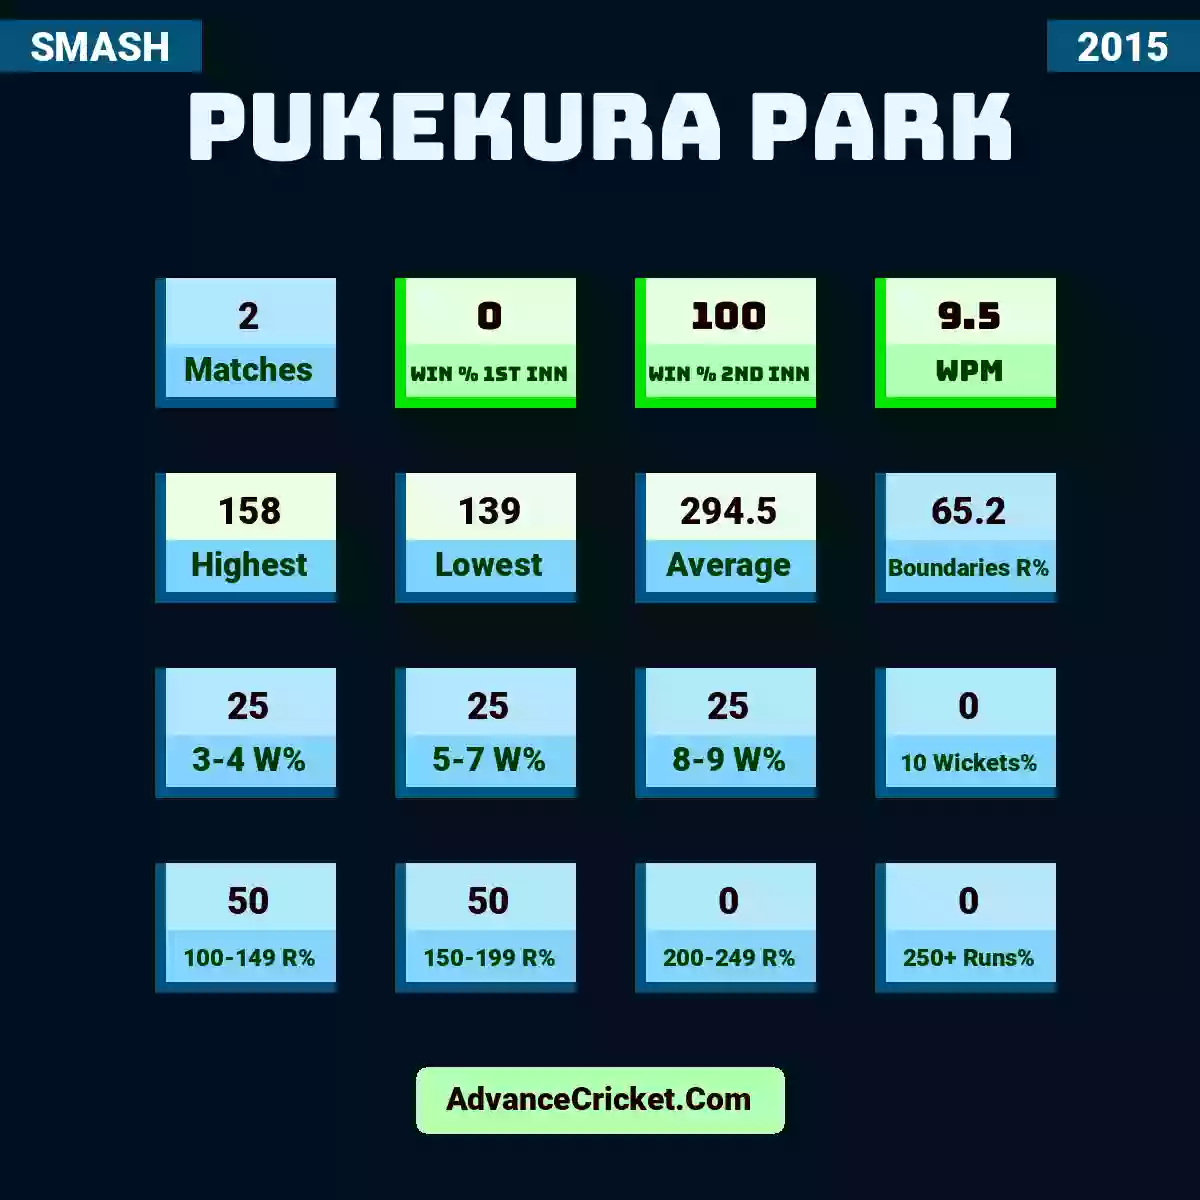 Image showing Pukekura Park with Matches: 2, Win % 1st Inn: 0, Win % 2nd Inn: 100, WPM: 9.5, Highest: 158, Lowest: 139, Average: 294.5, Boundaries R%: 65.2, 3-4 W%: 25, 5-7 W%: 25, 8-9 W%: 25, 10 Wickets%: 0, 100-149 R%: 50, 150-199 R%: 50, 200-249 R%: 0, 250+ Runs%: 0.